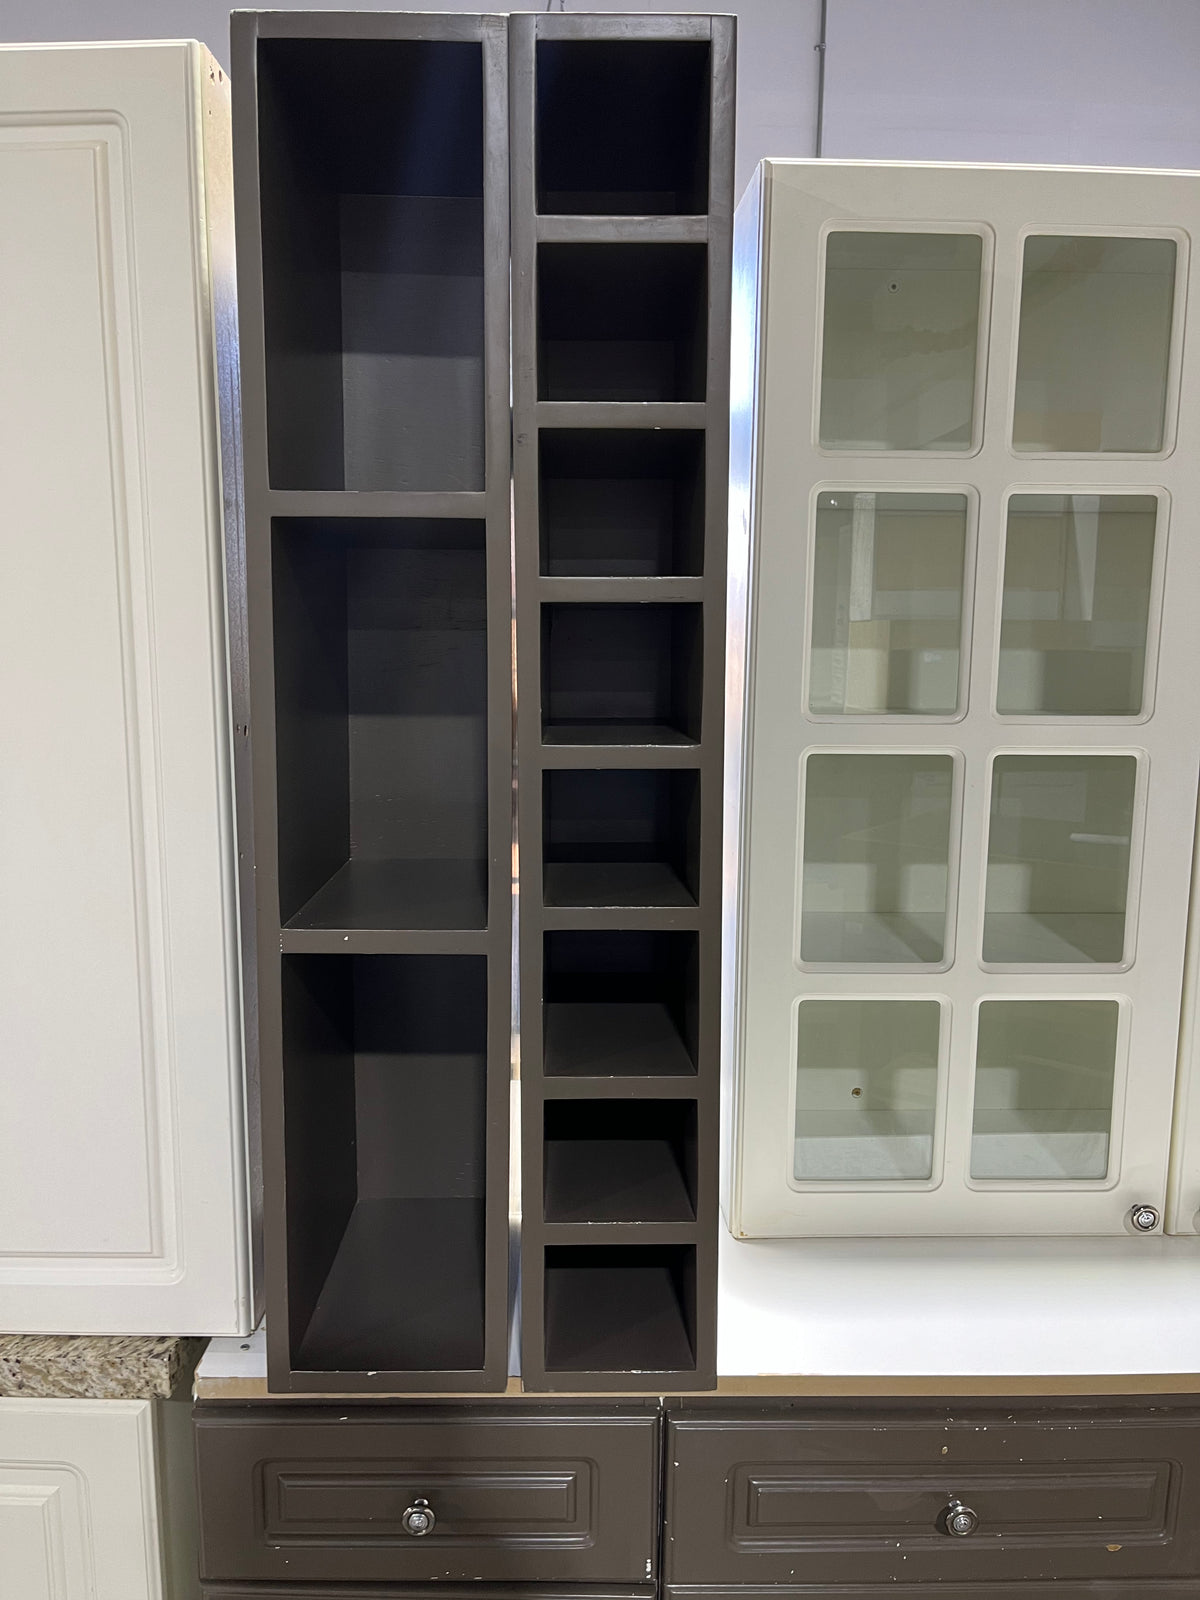 Set of Kitchen Cabinets (Grey + White)